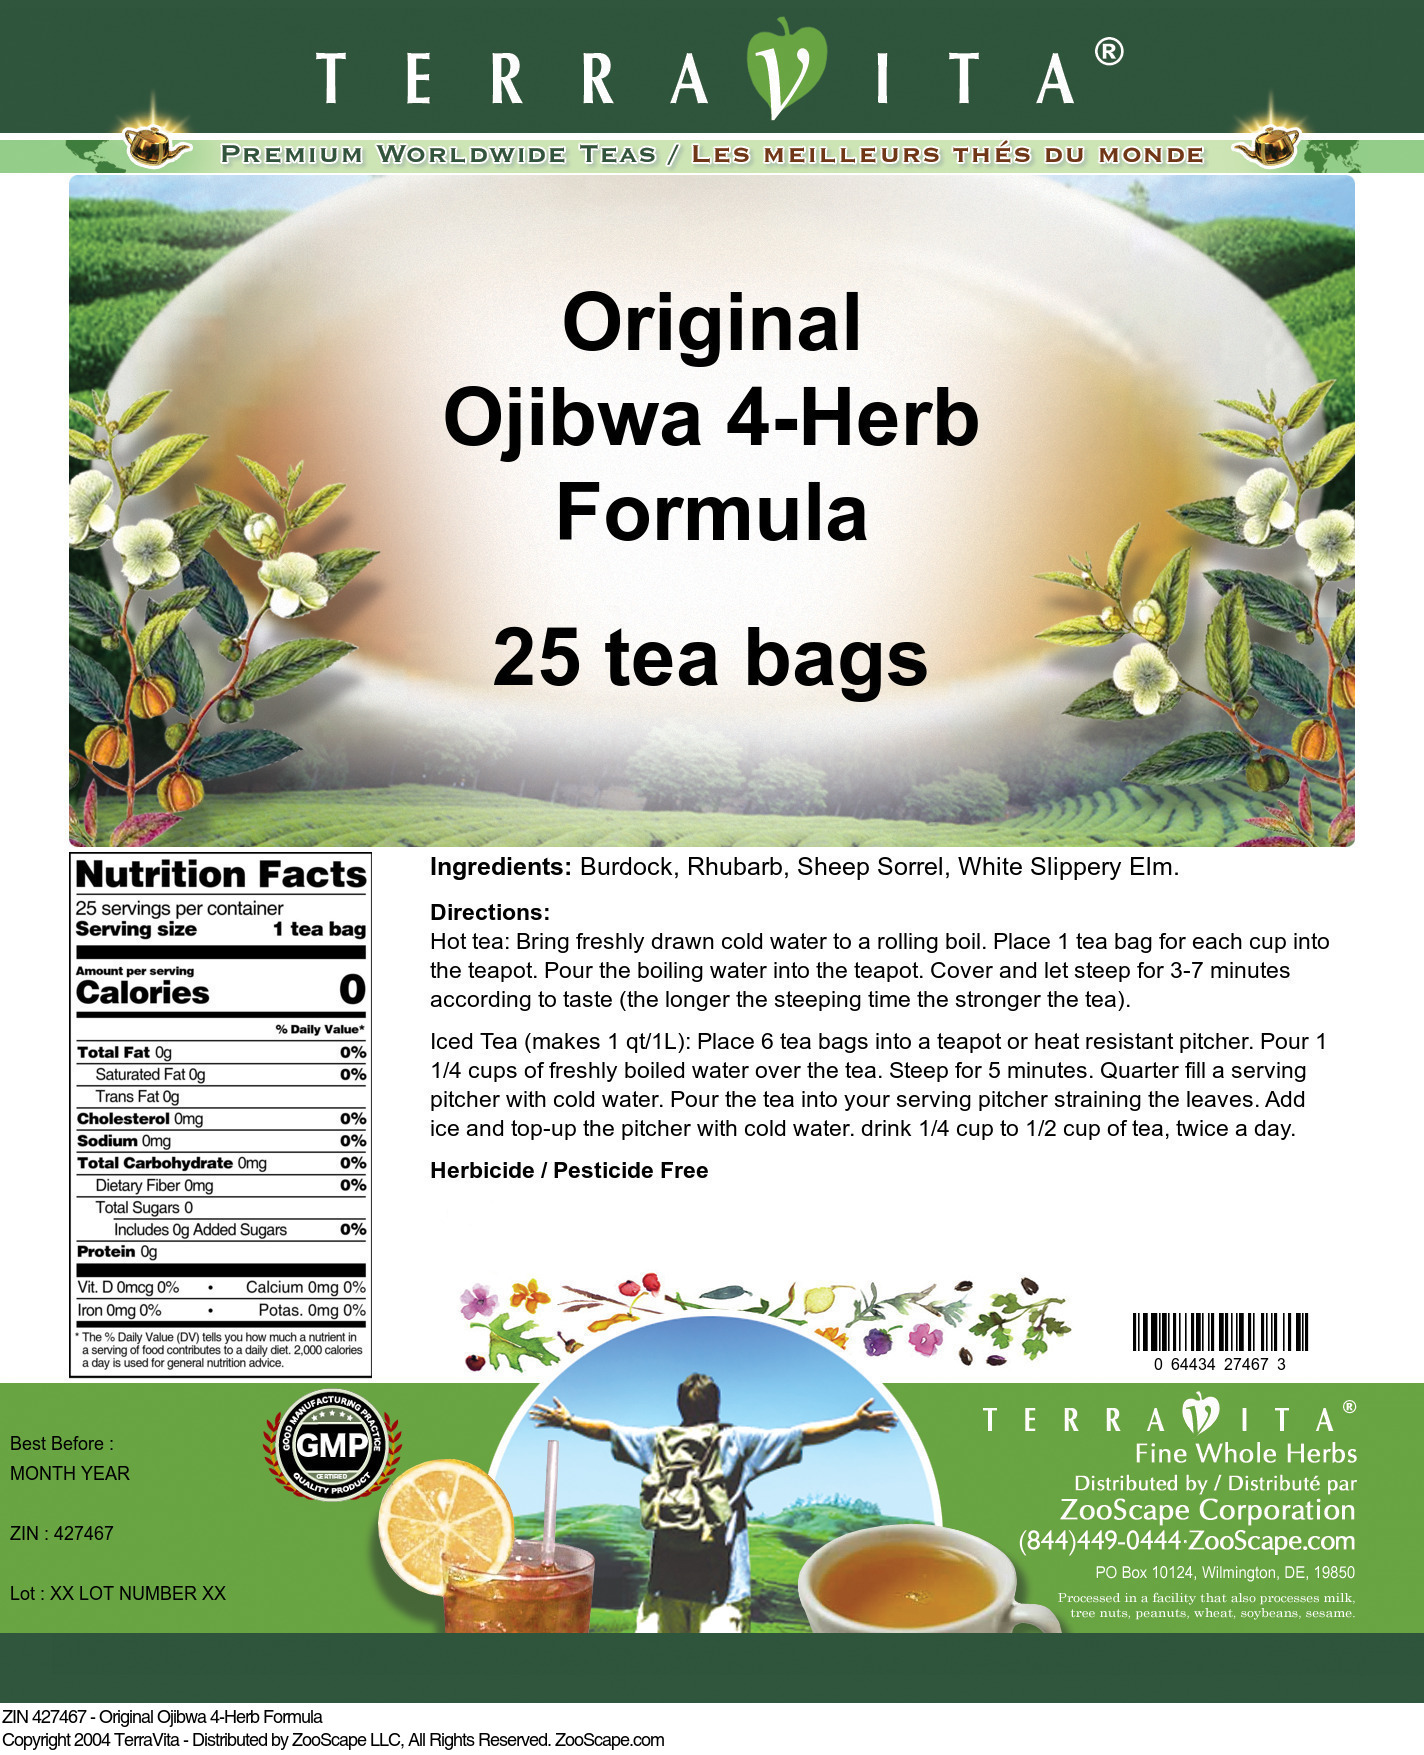 Original Ojibwa 4-Herb Formula - Label